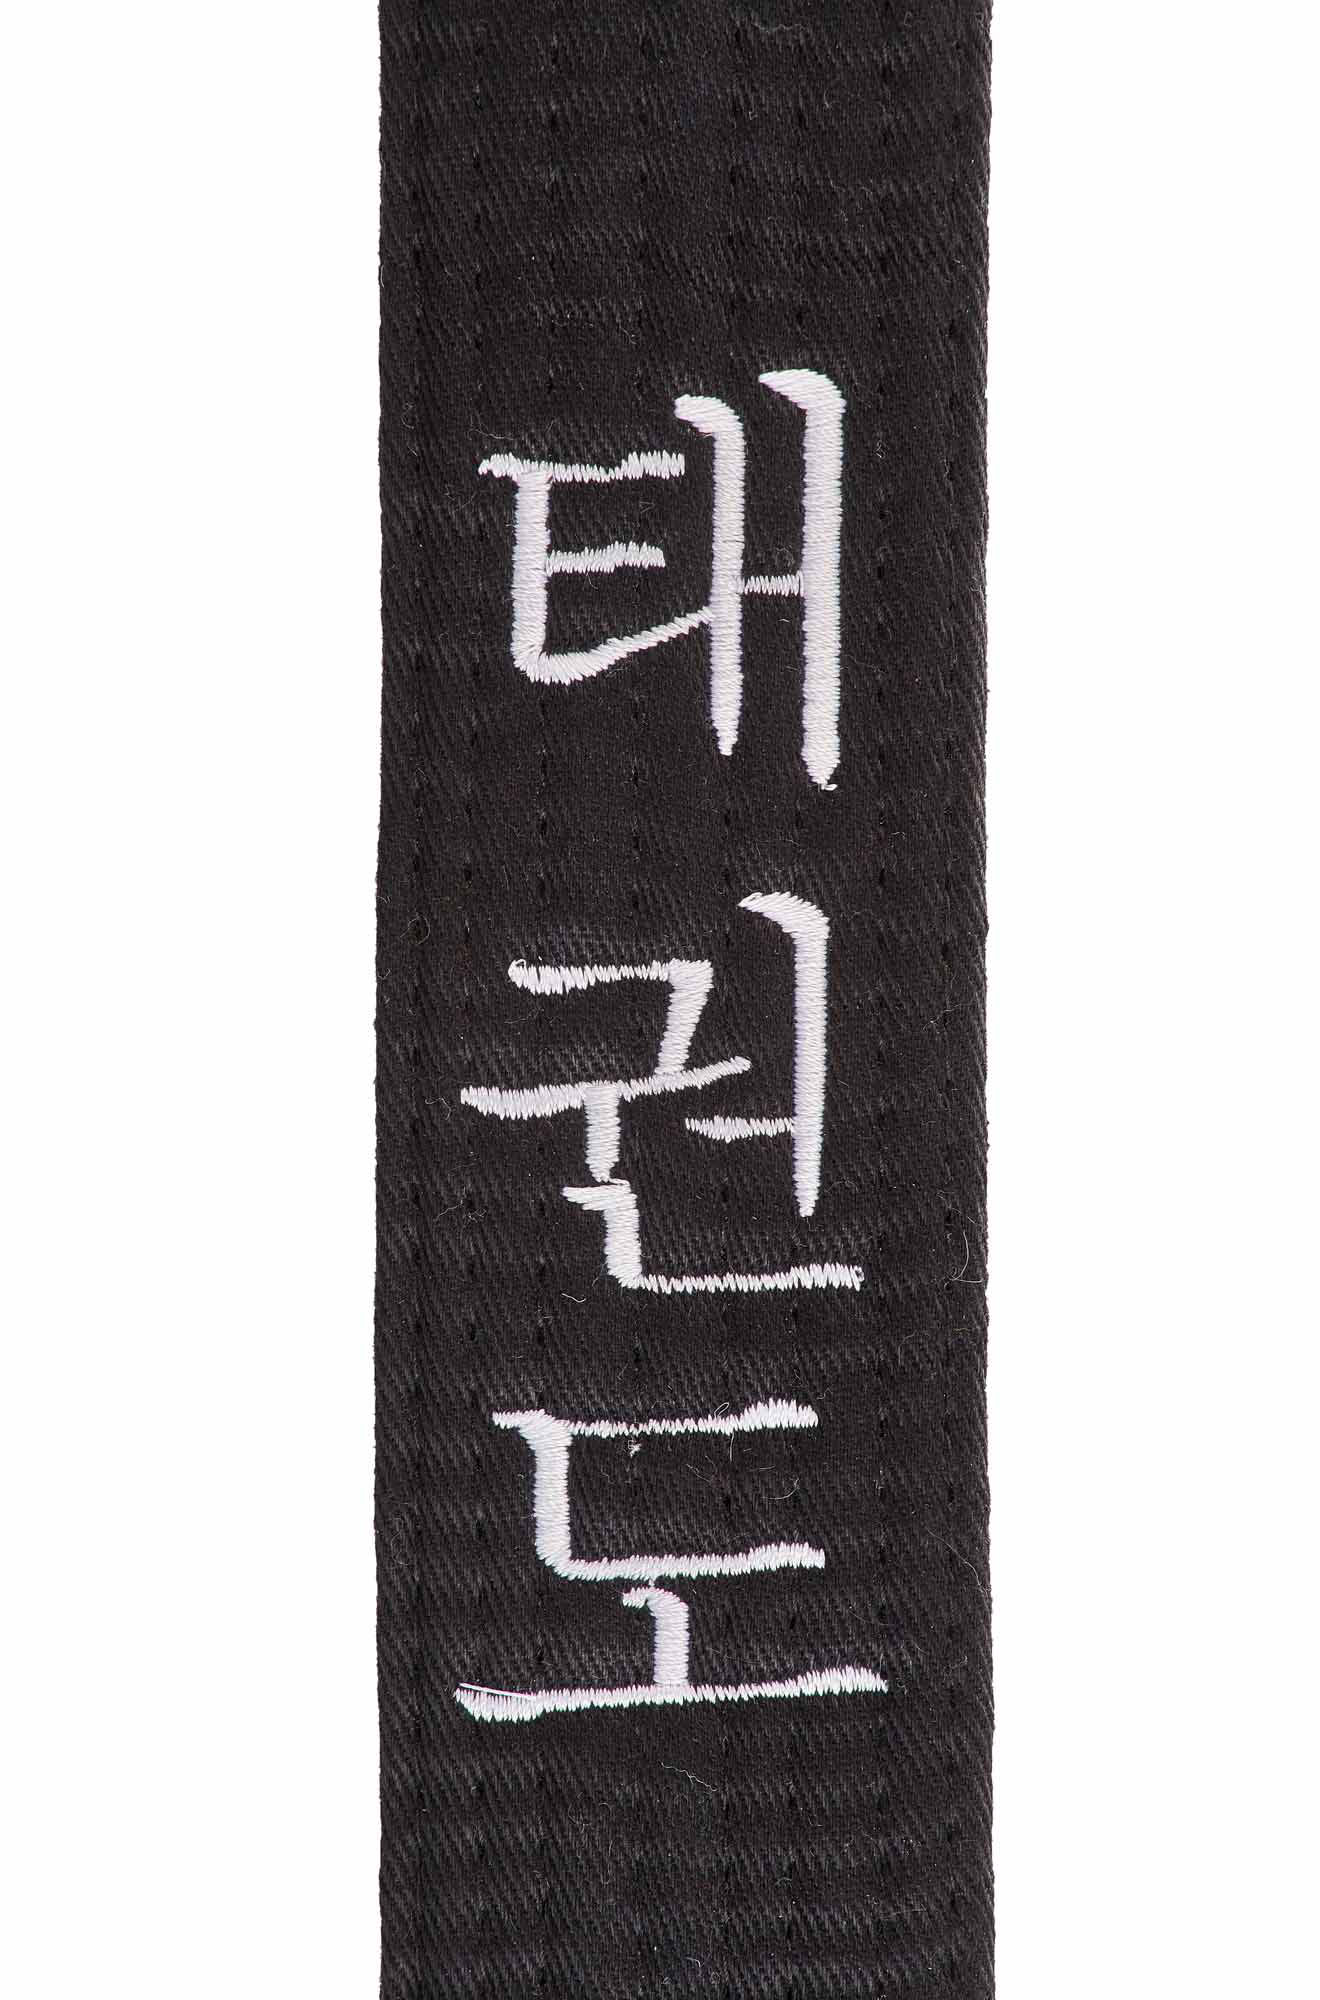 Customised Belt Embroidery Taekwondo Korean